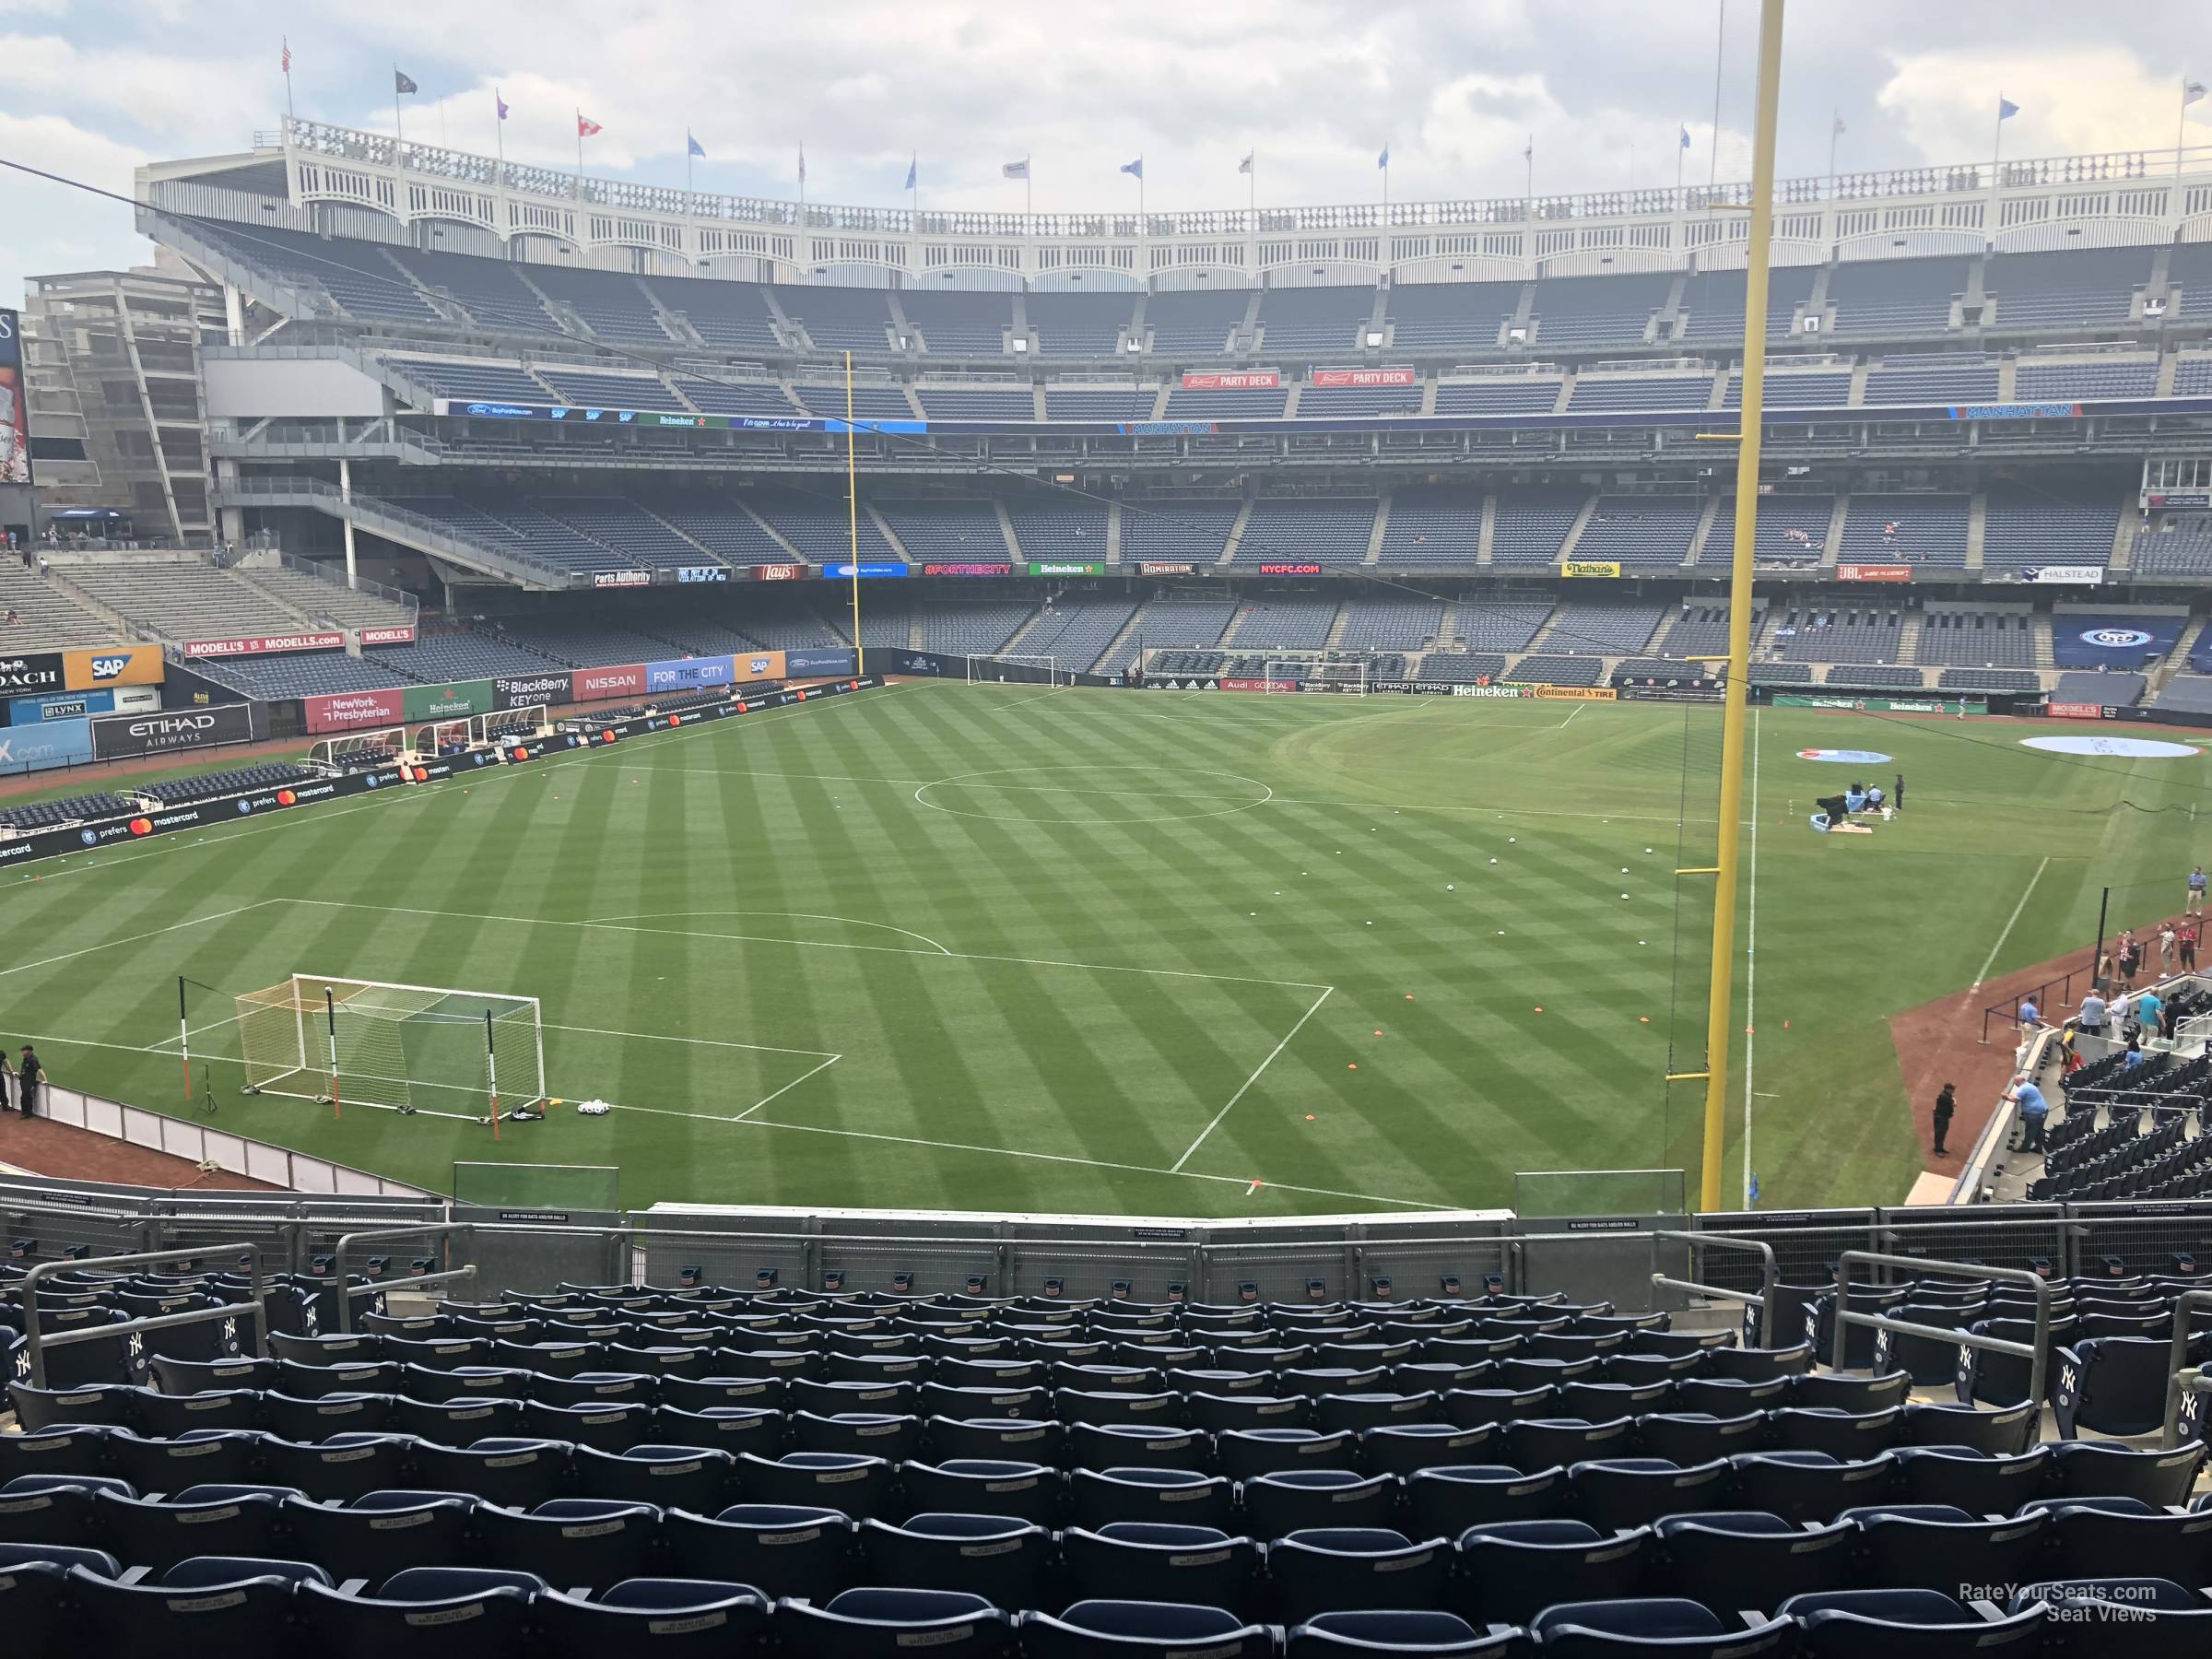 Shaded Seats at Yankee Stadium - Yankees Tickets in the Shade